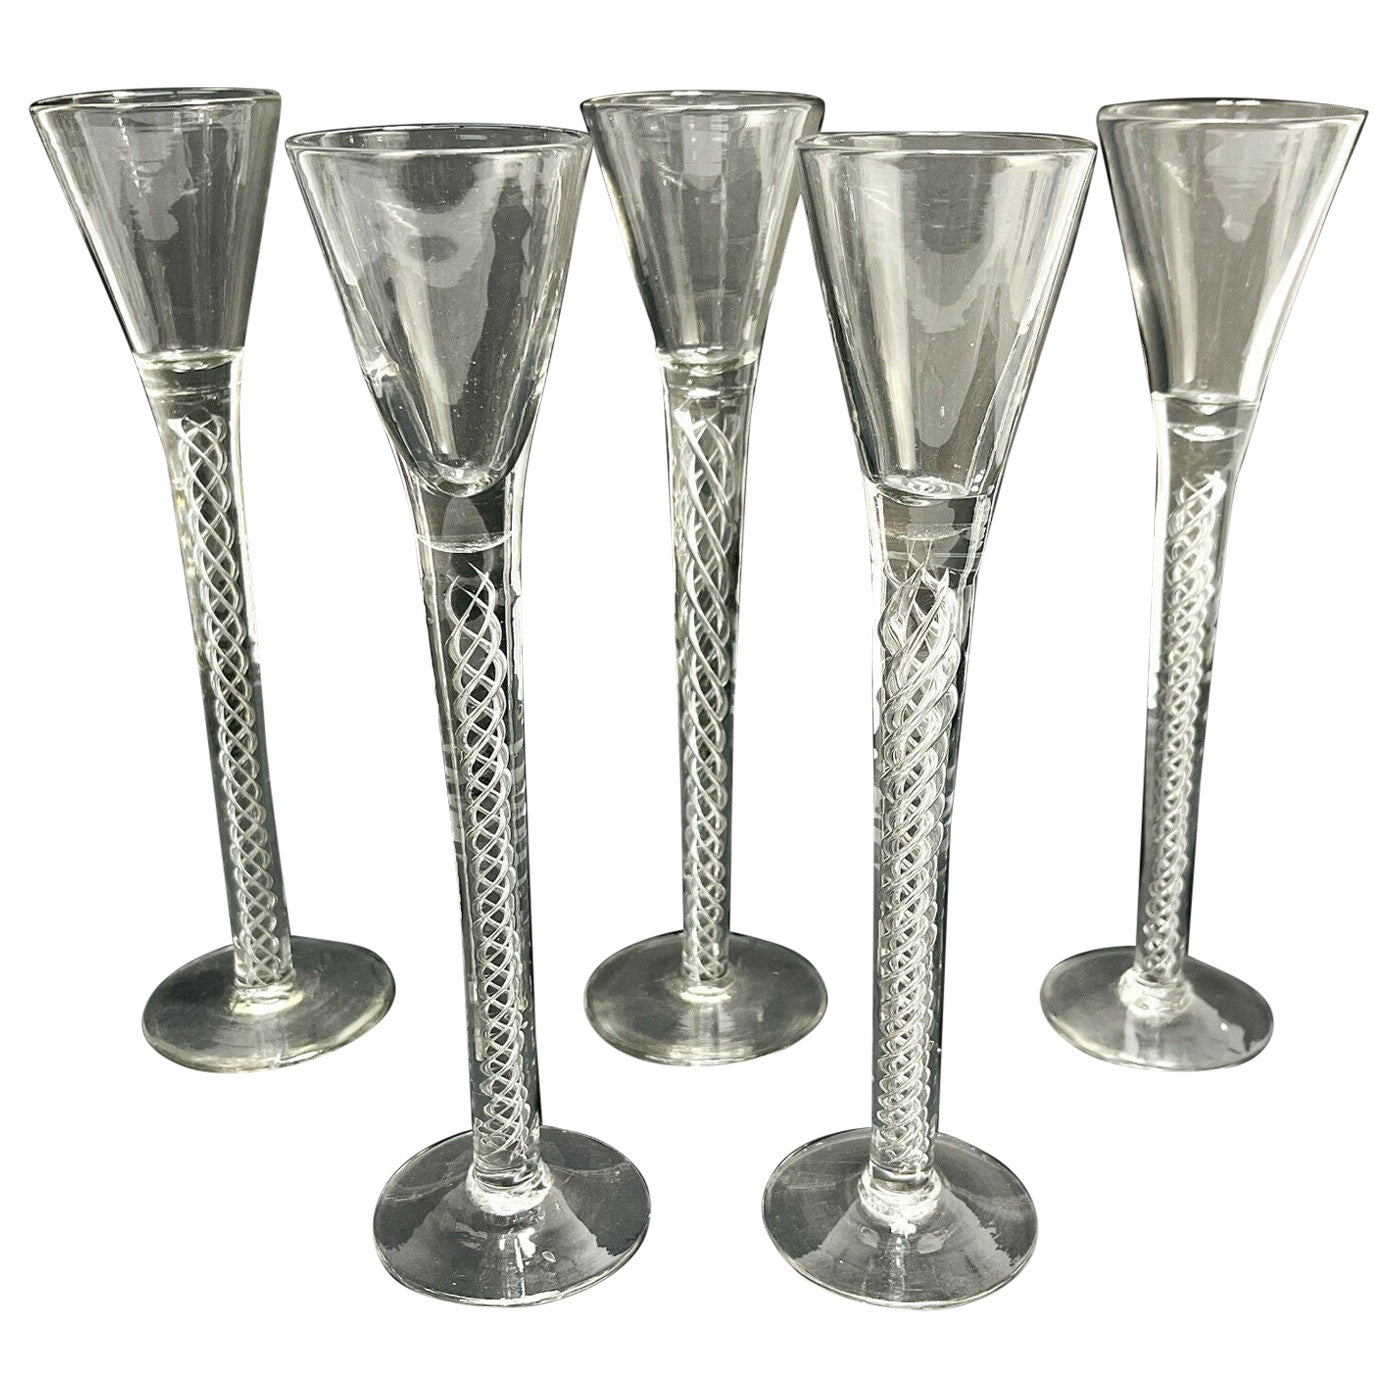 5 Victorian English Glass Wine Goblets, Air Twist Stems, 2nd Half 19th Century